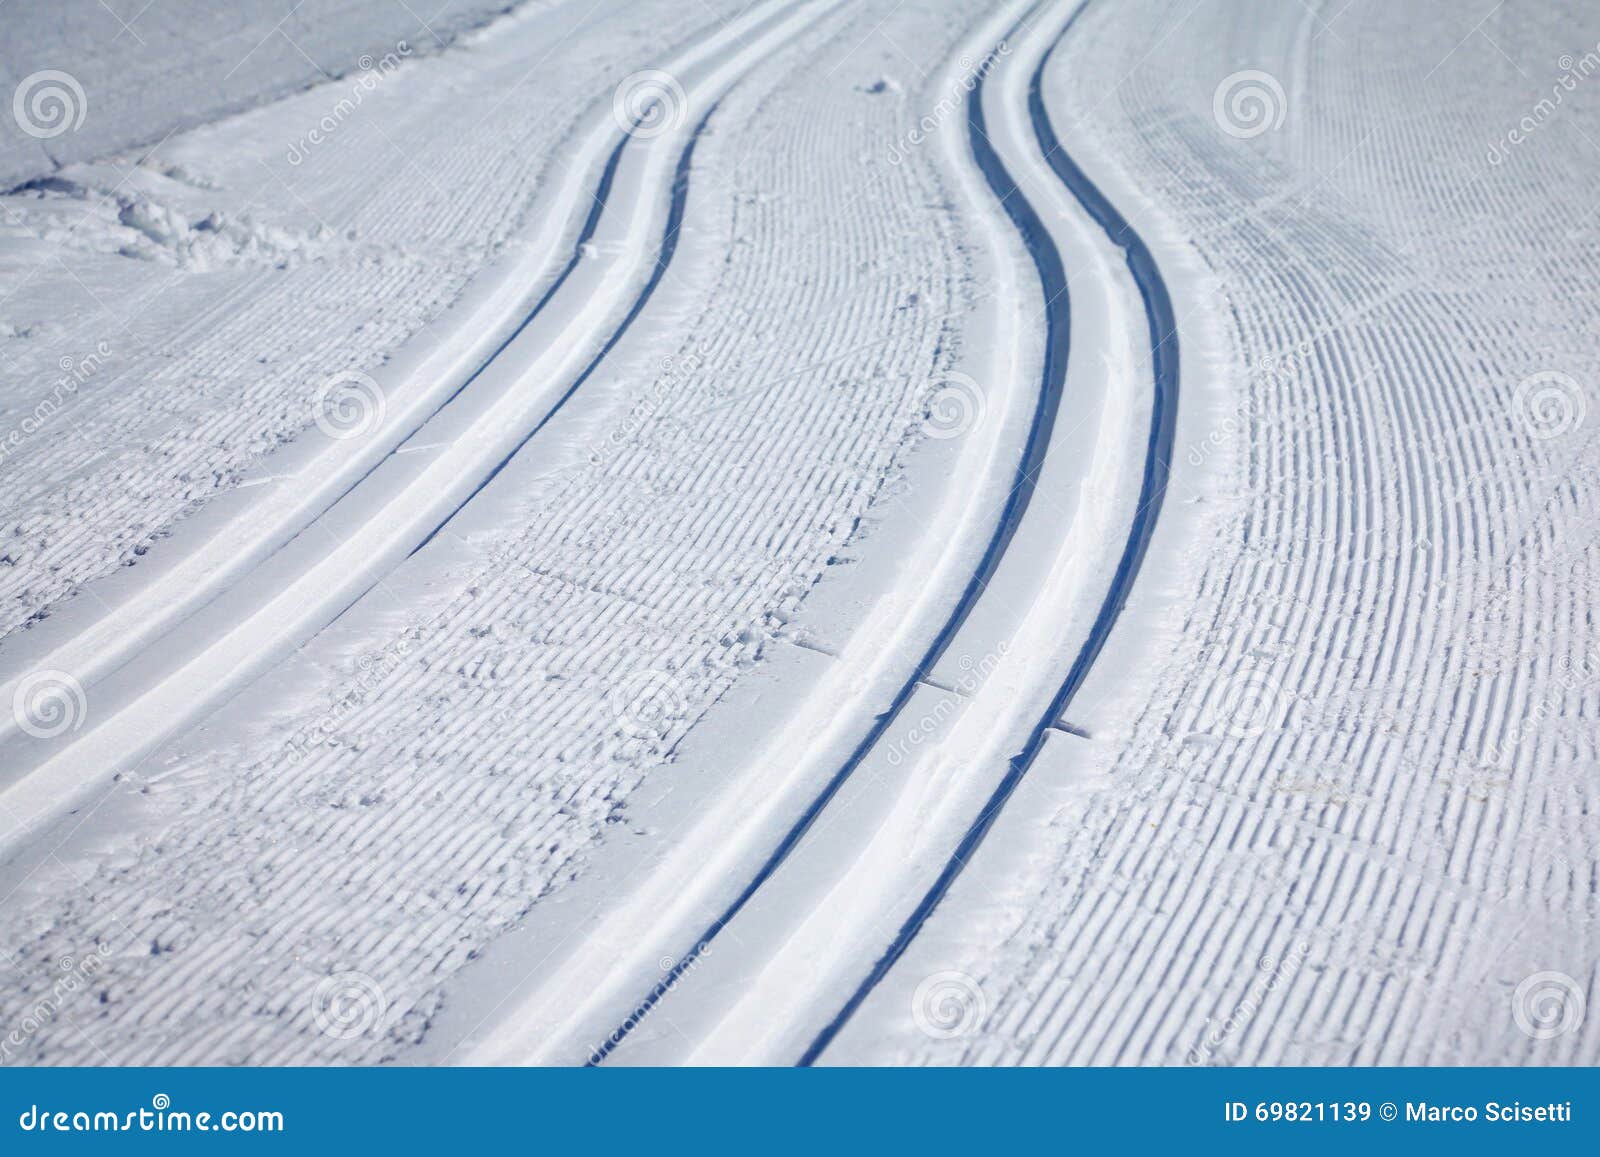 cross country ski tracks in engadin